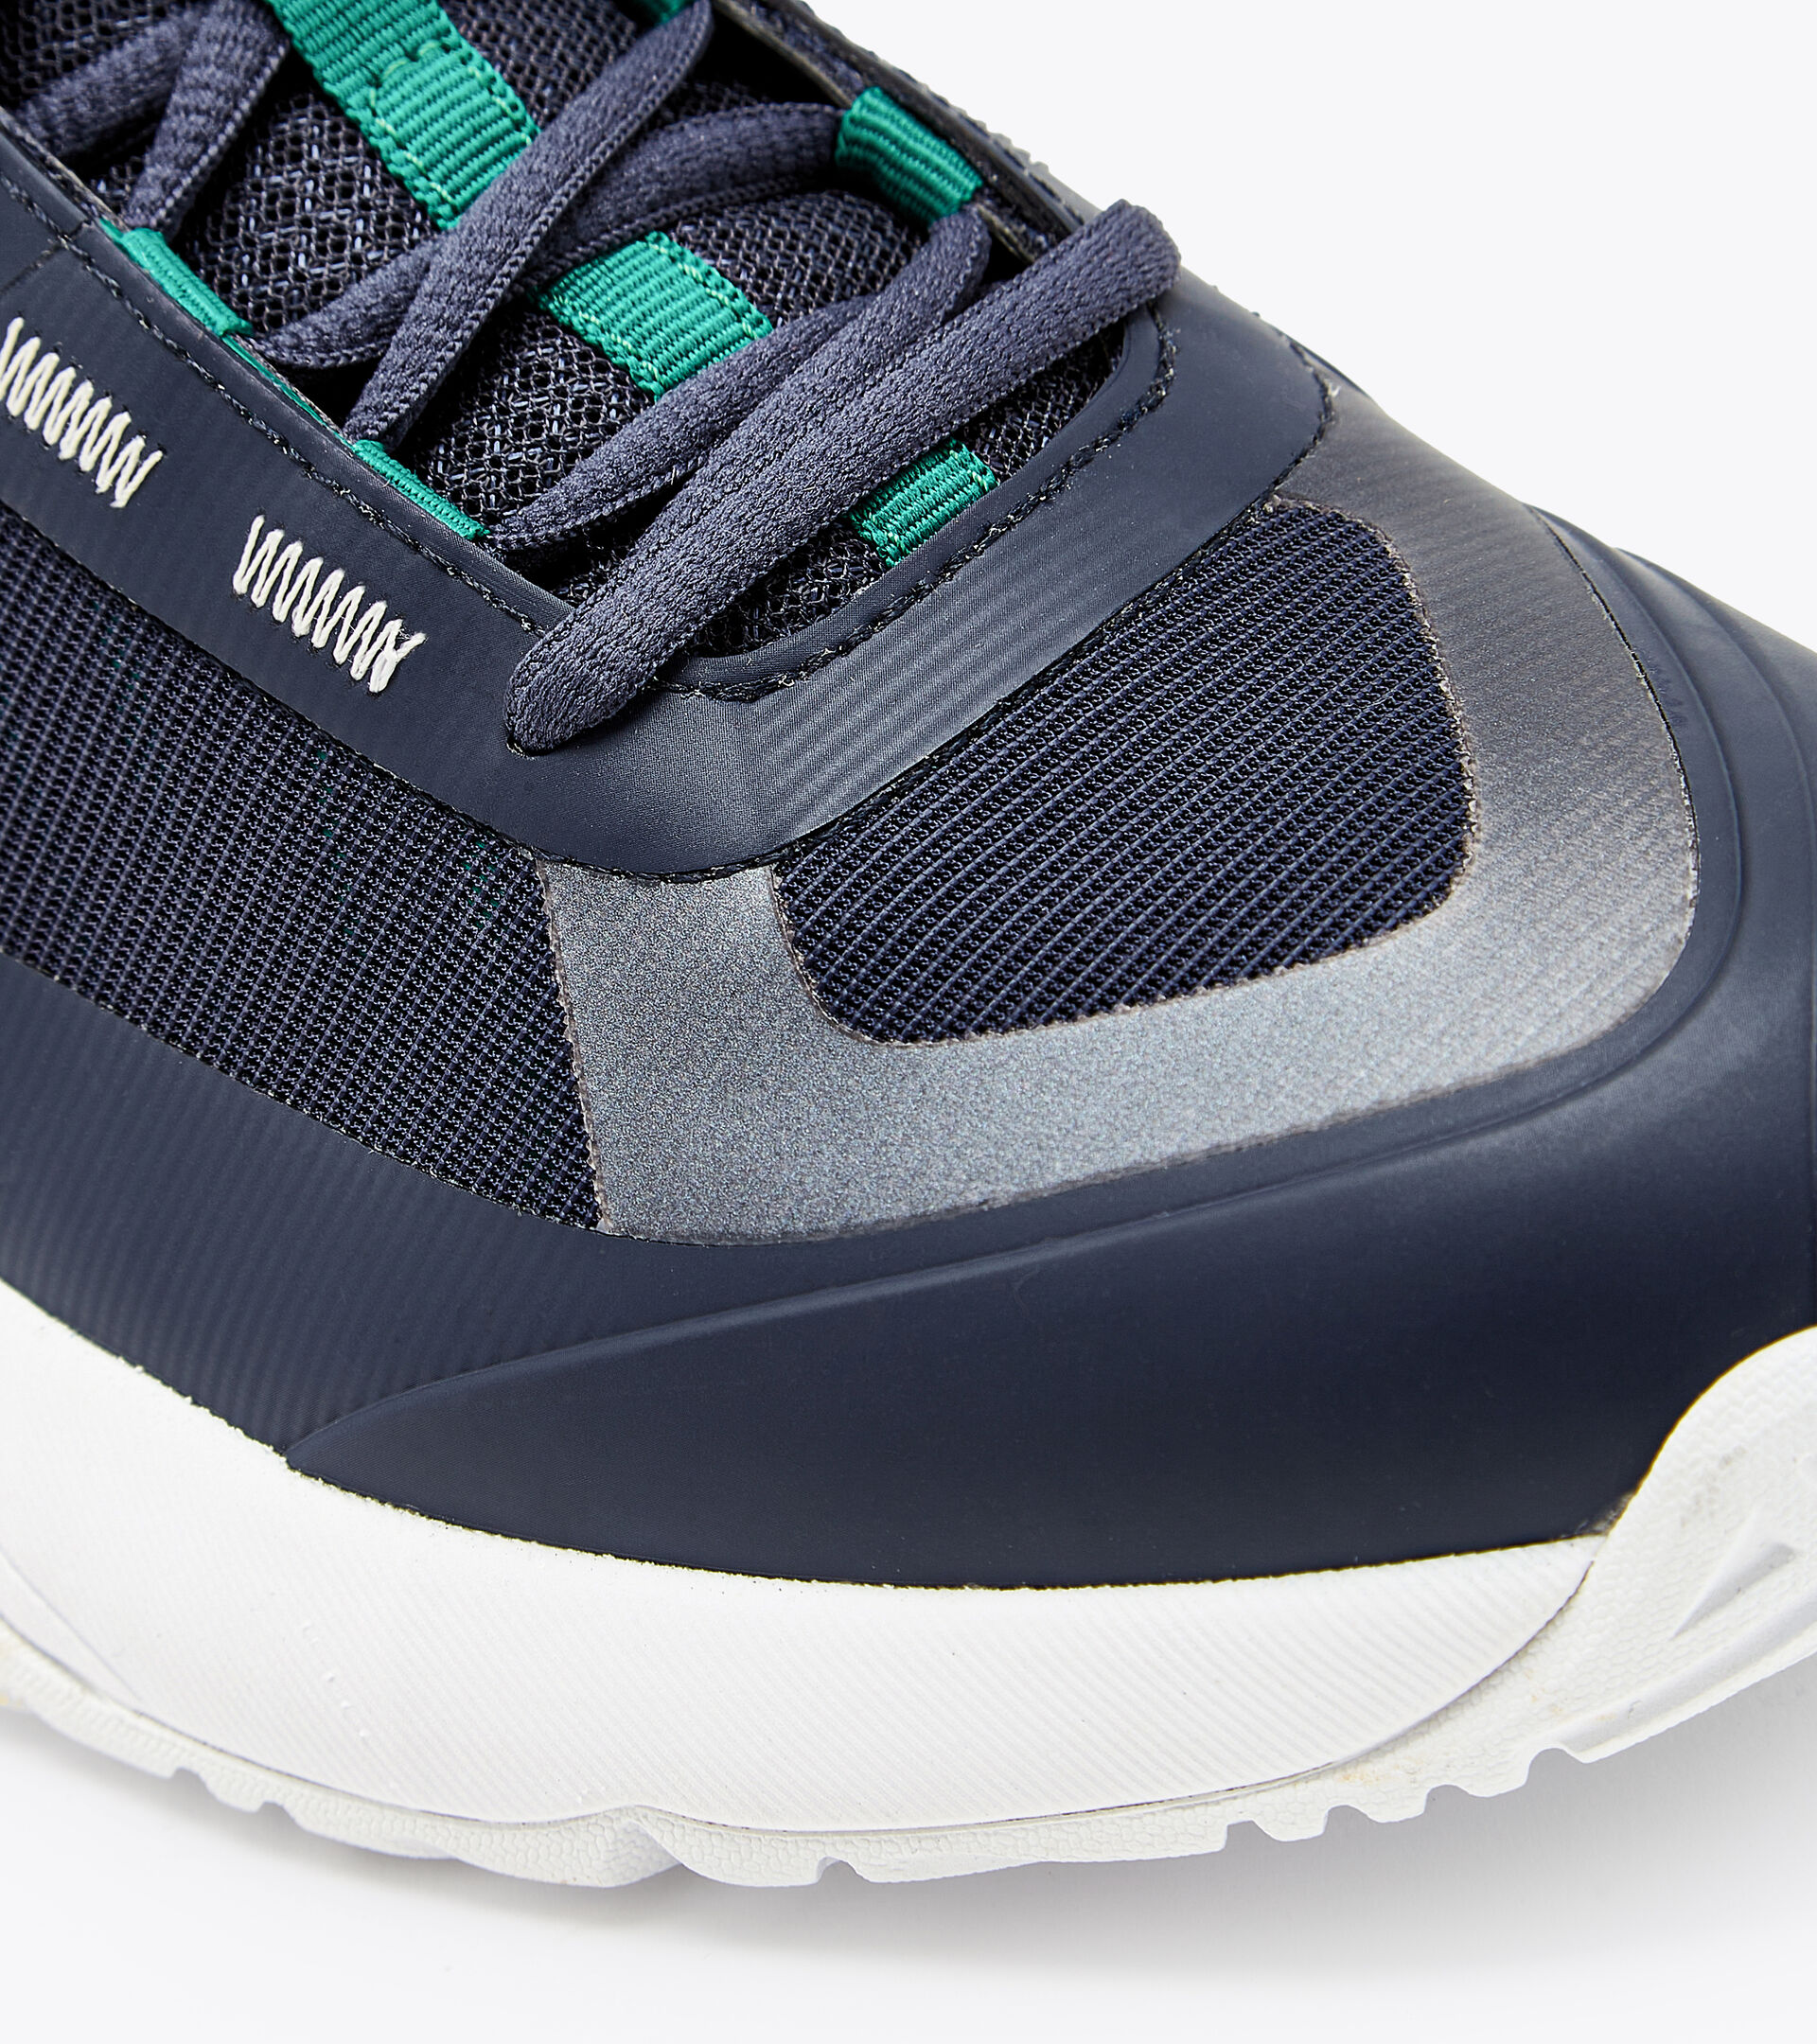 Tennis shoes for hard surfaces or clay courts - Men FINALE AG BLUE CORSAIR/WHITE - Diadora